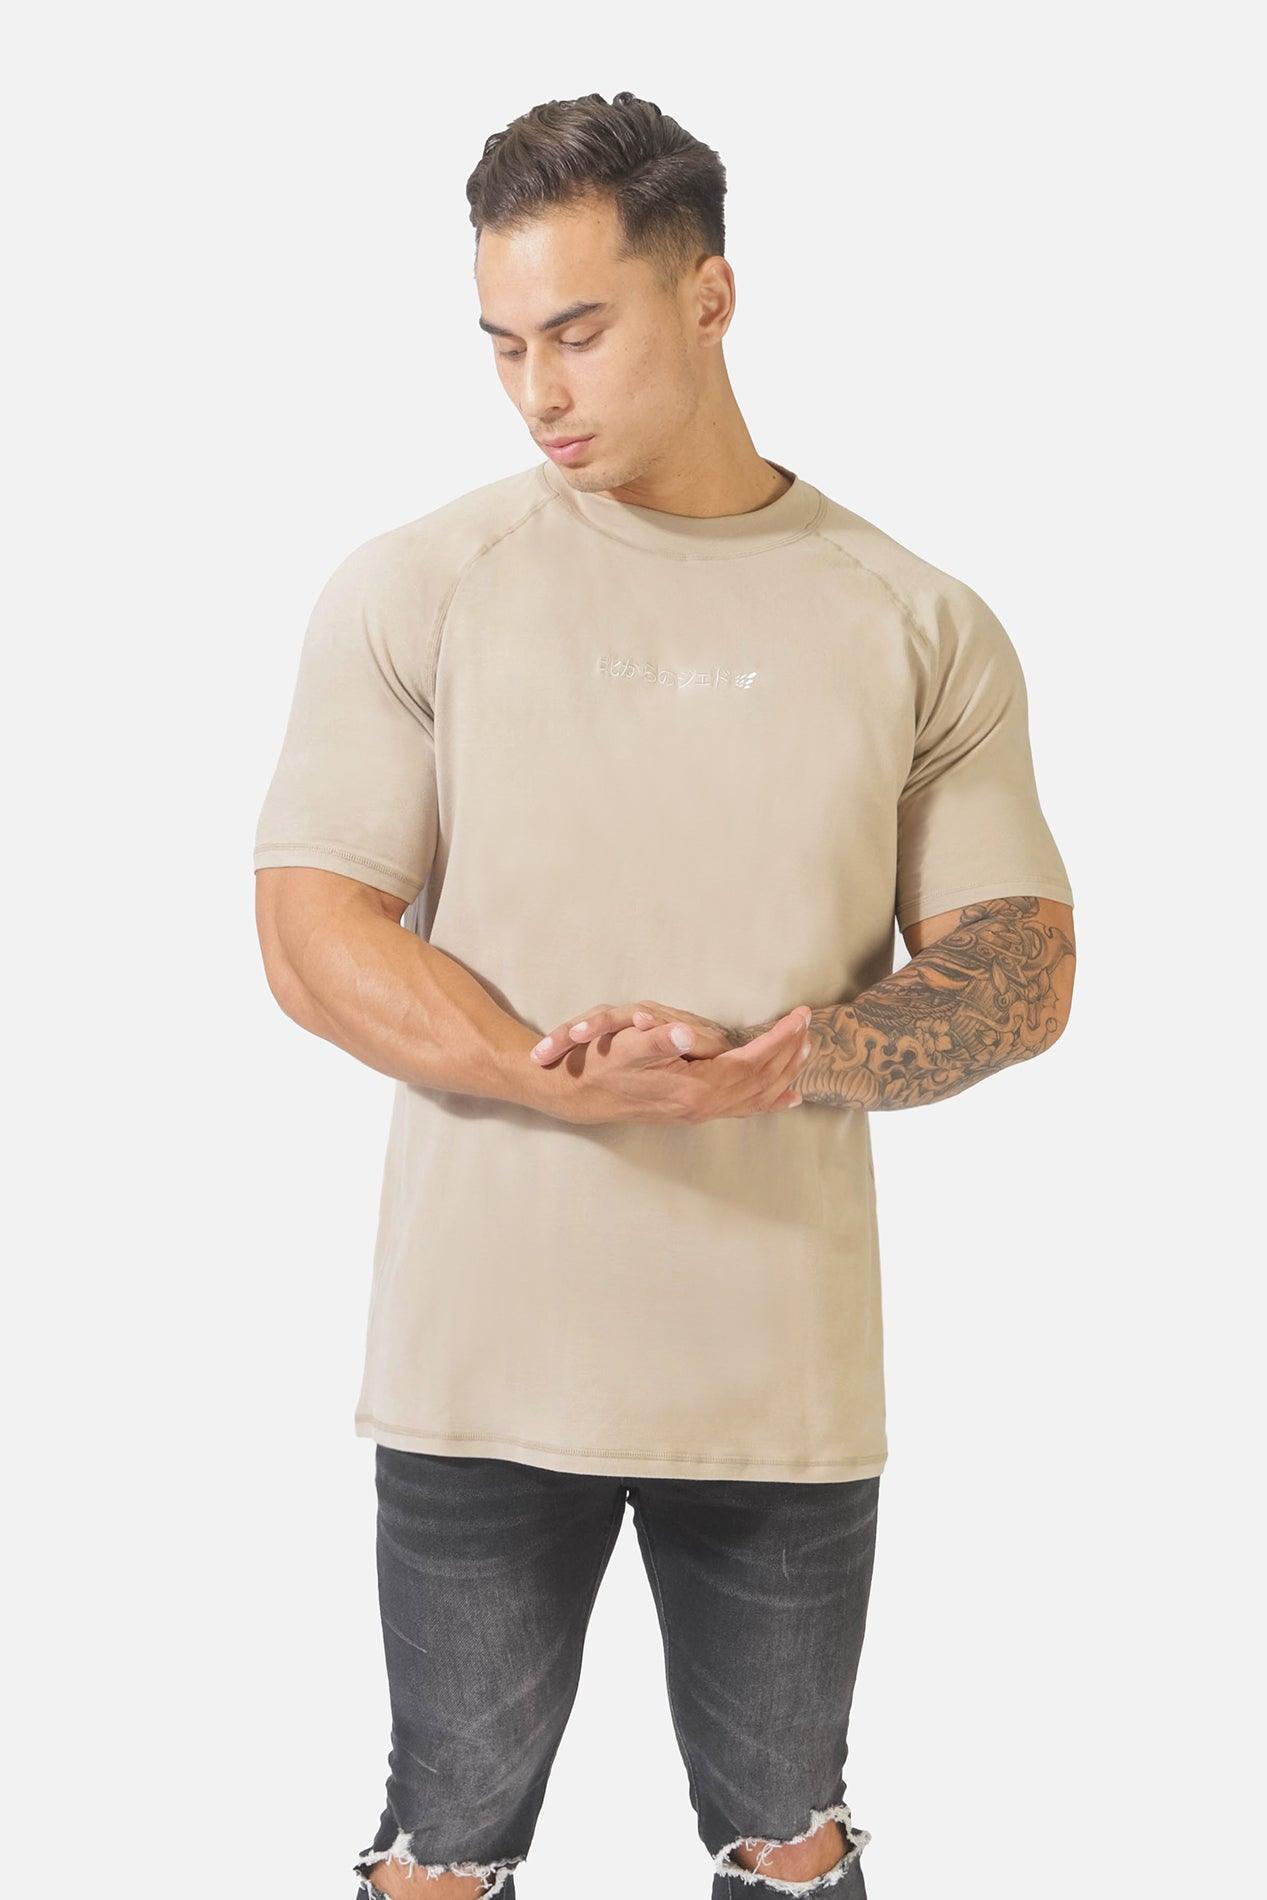 Luxury Edition Oversized Stretch T-Shirt - Khaki - Jed North